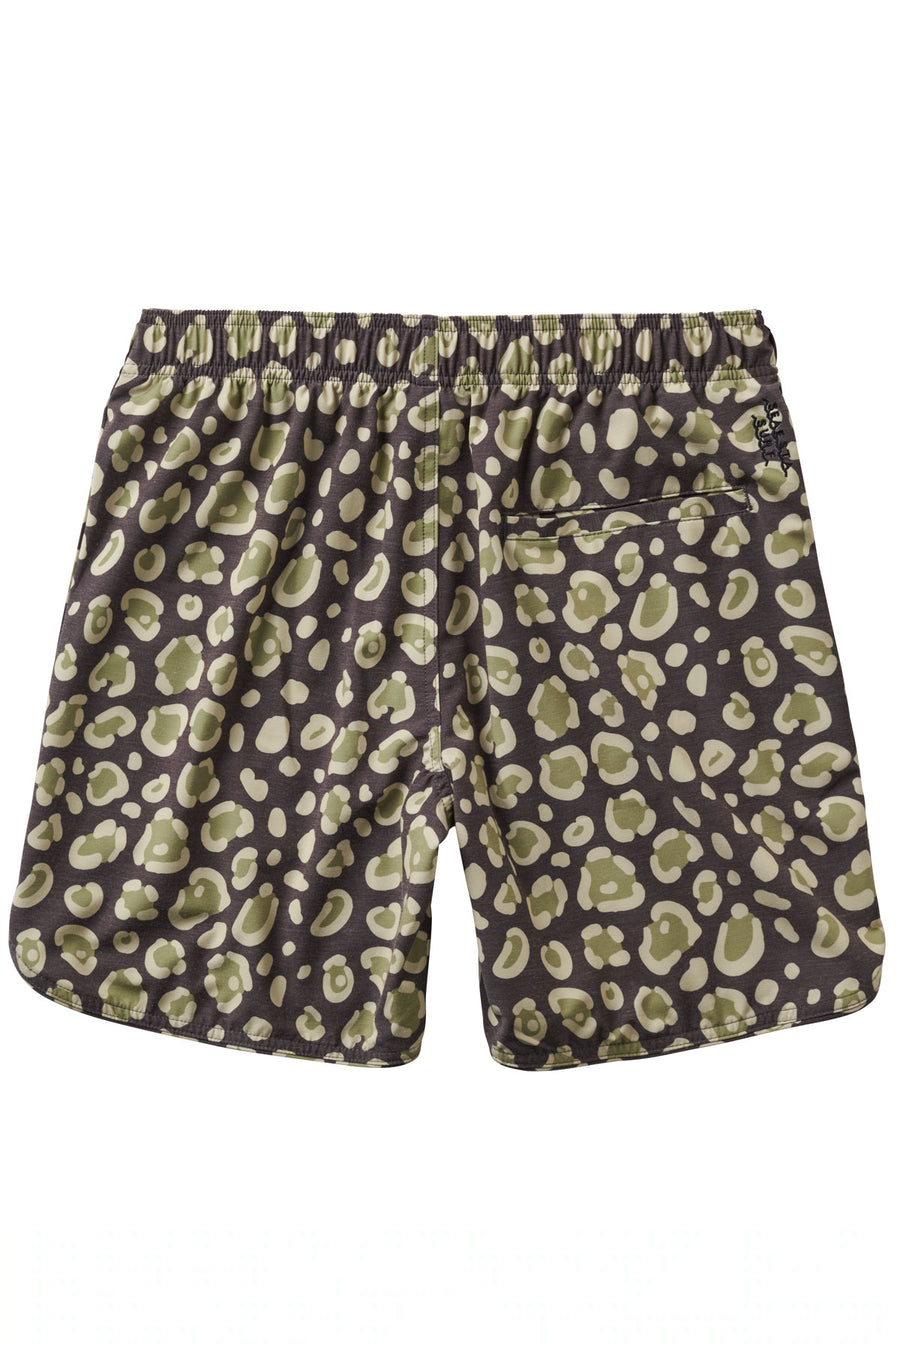 Men's Boardshorts / Calico Crab / Charcoal